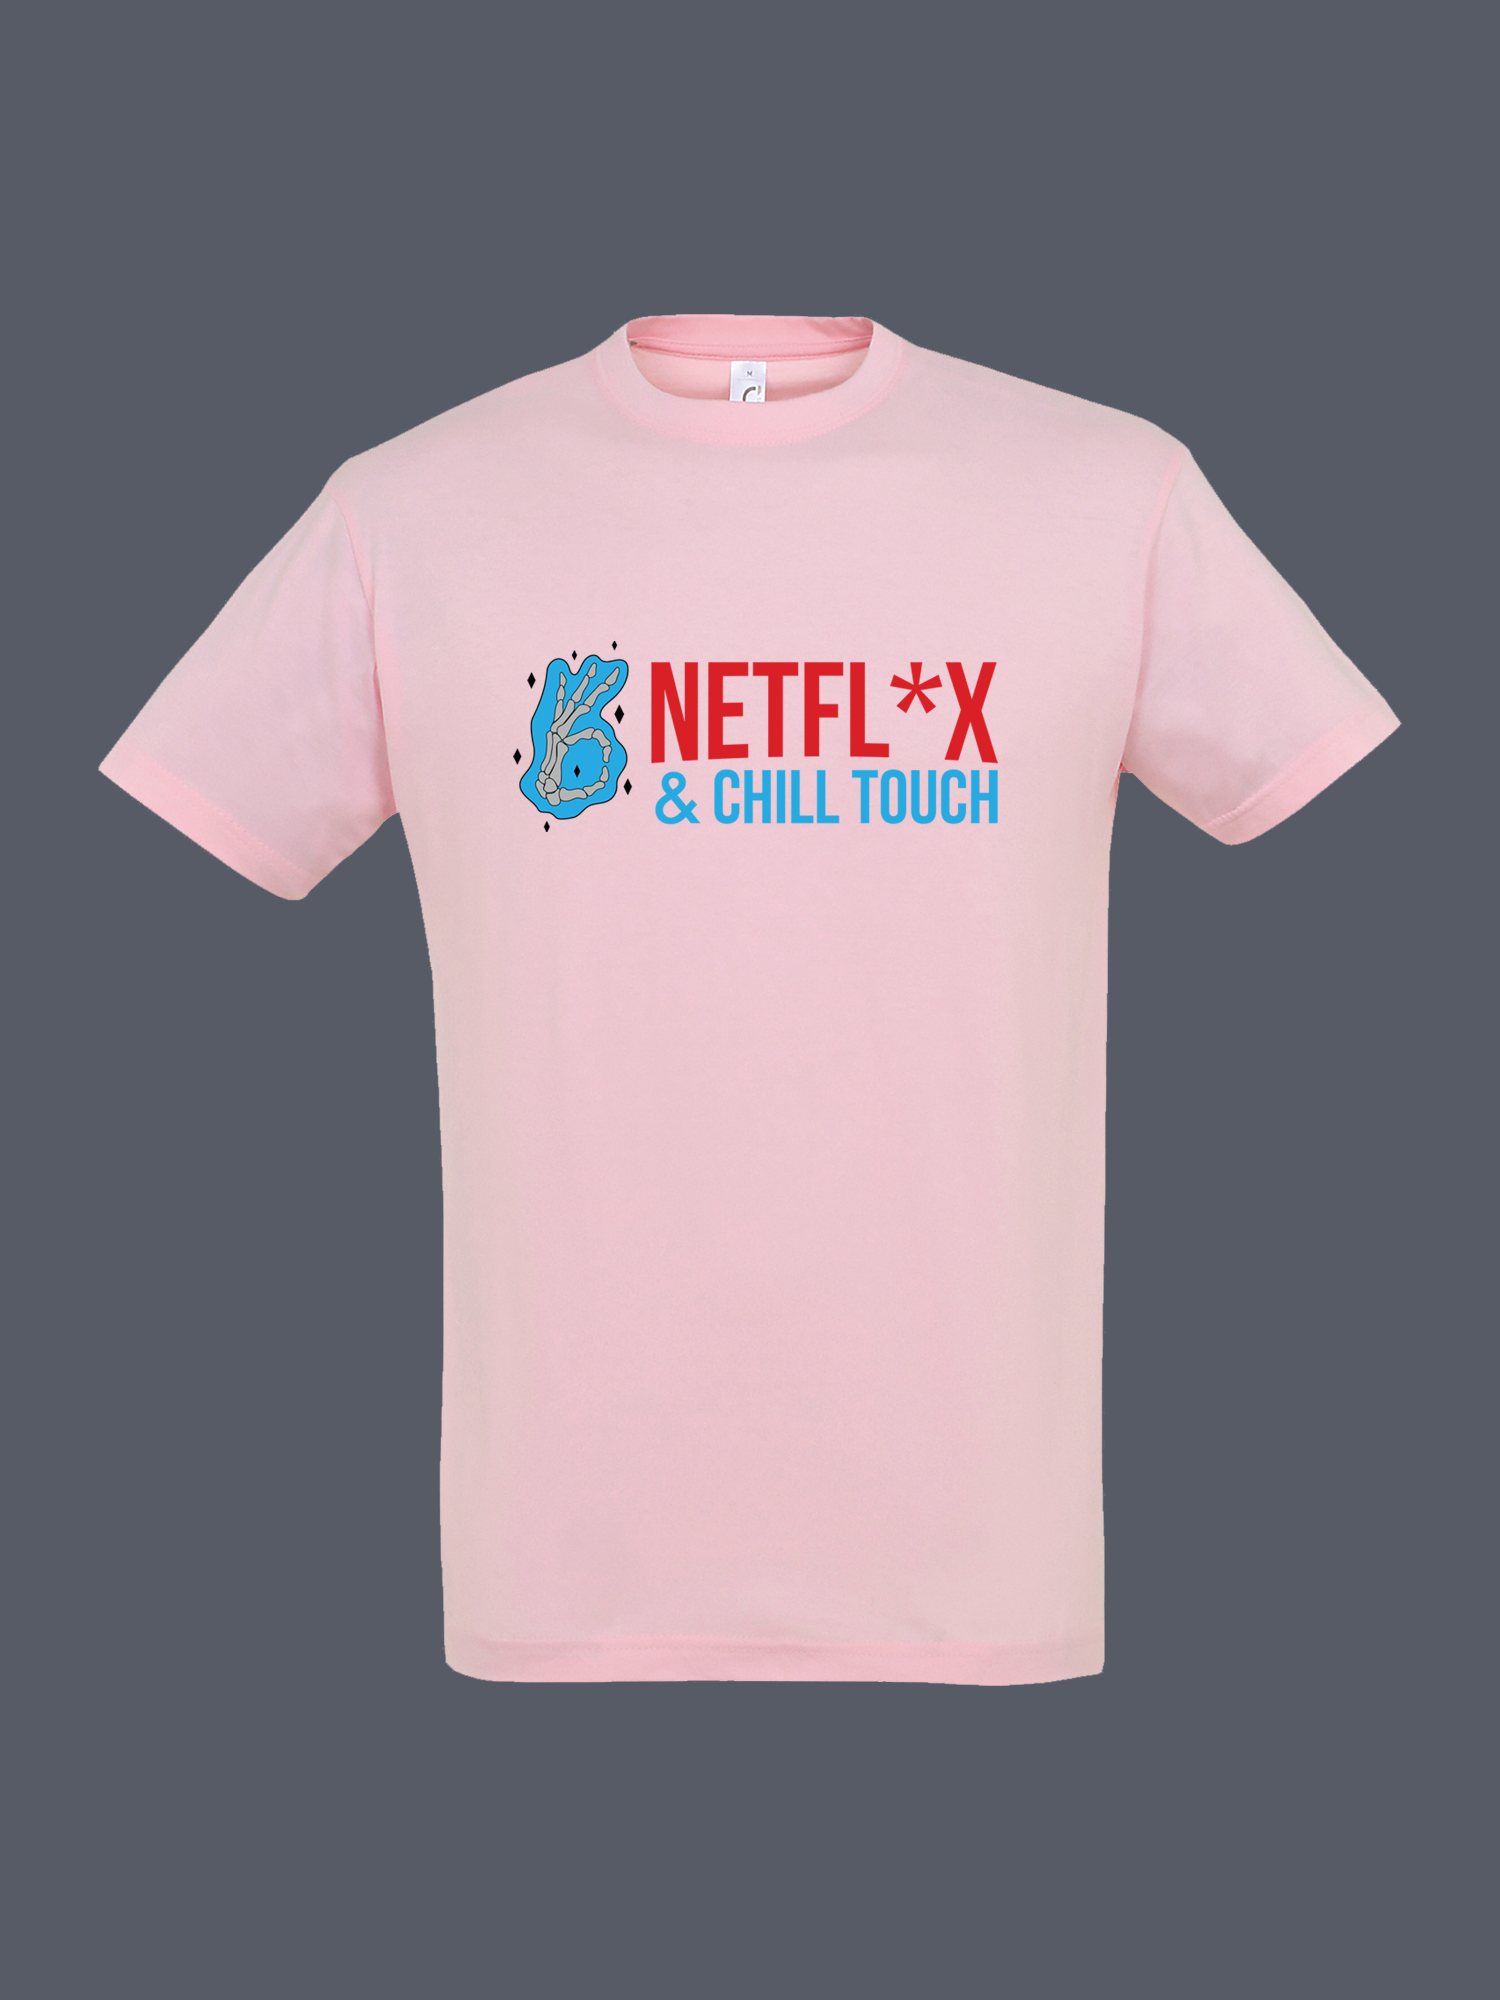 Netflix & Chill Touch Tshirt Pink